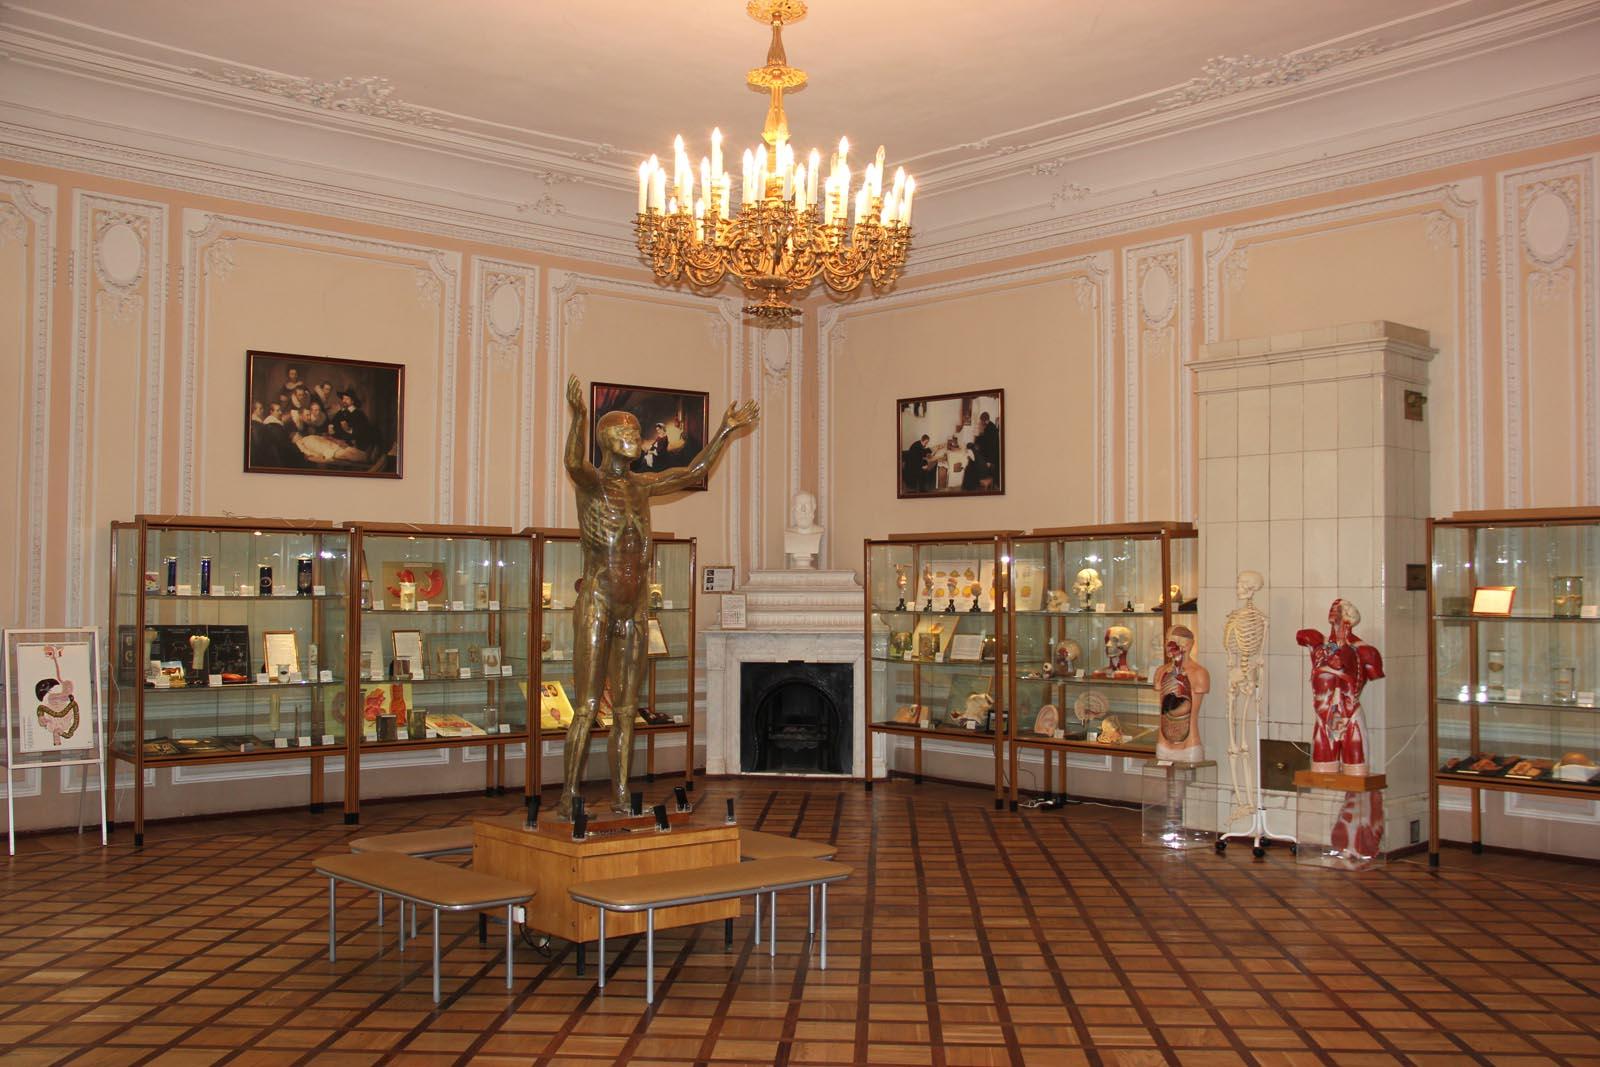 Музей гигиены фото